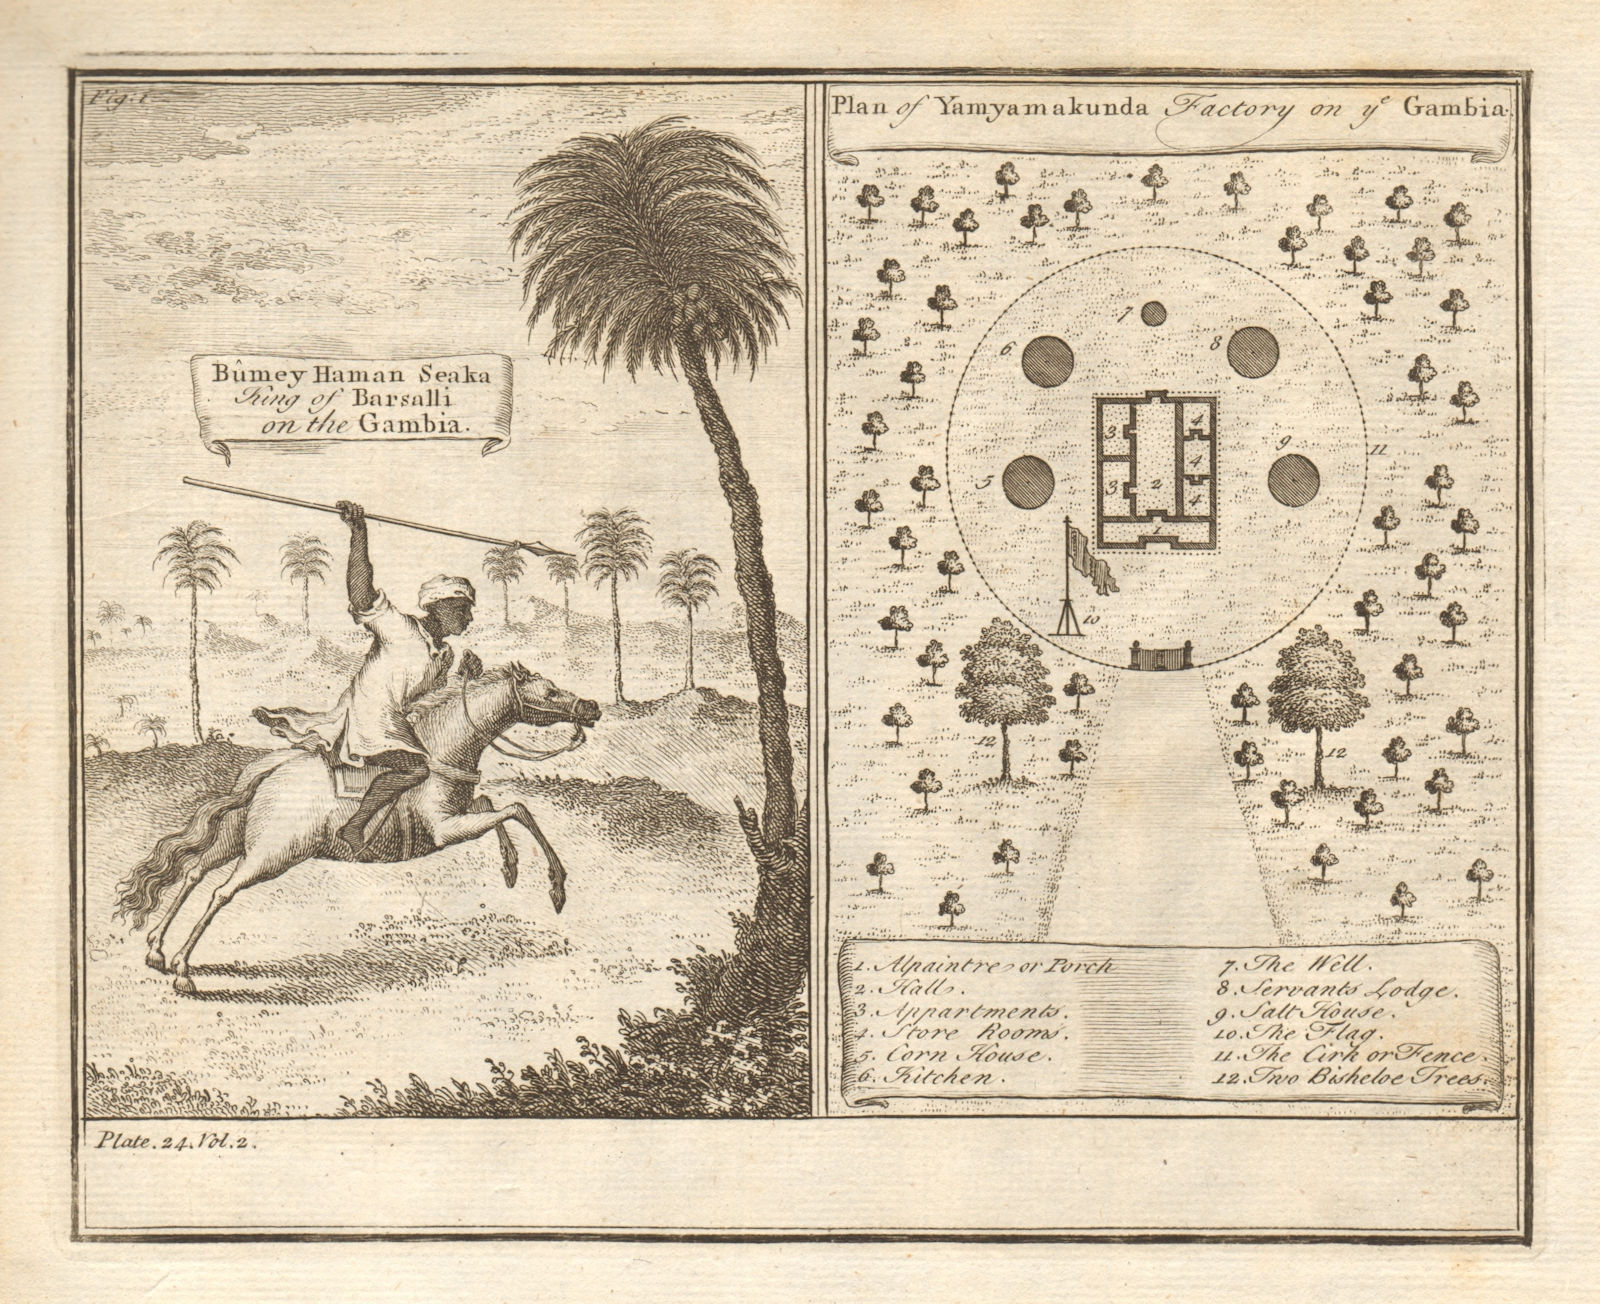 Bumey Haman Seaka, King of Barsalli. Yamyamakunda Factory. Senegal/Gambia 1745